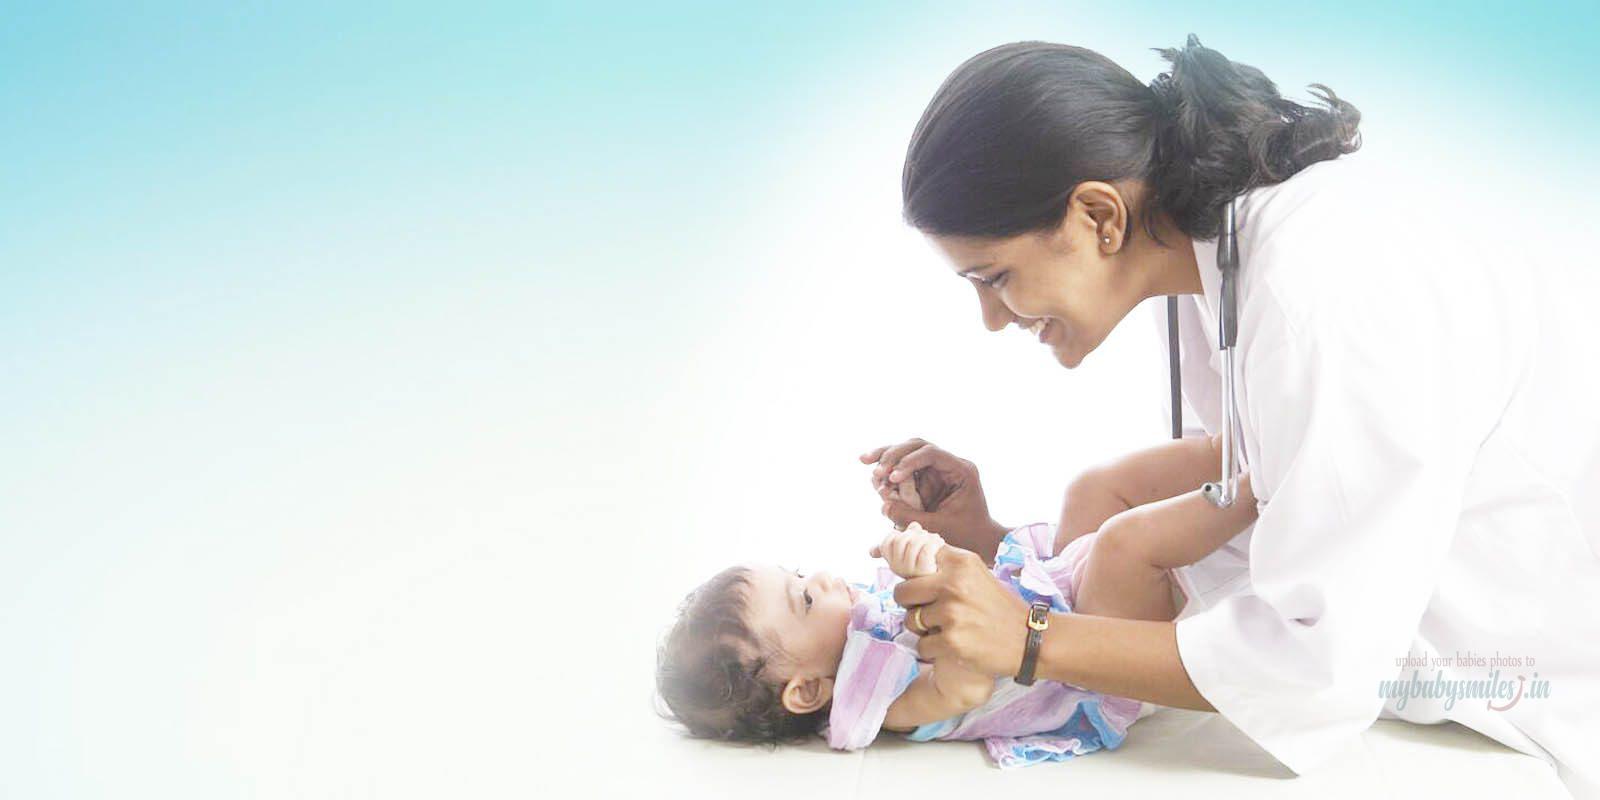 Adorable Babies HD Images – Life Insurance Plans